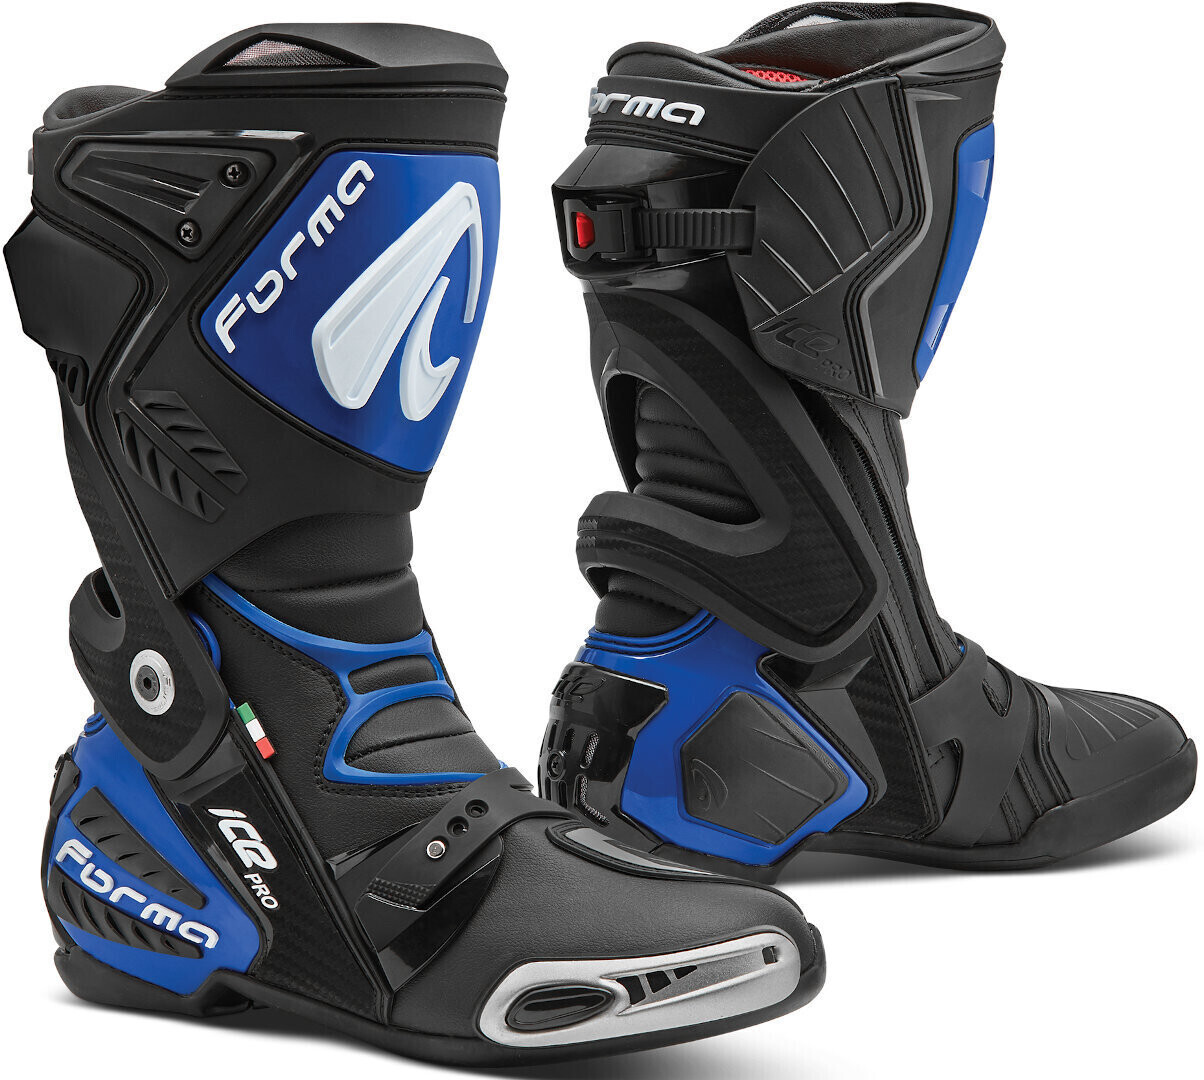 forma-boots-ice-pro-schwarz-blau-ab-199-95-preisvergleich-bei-idealo-de